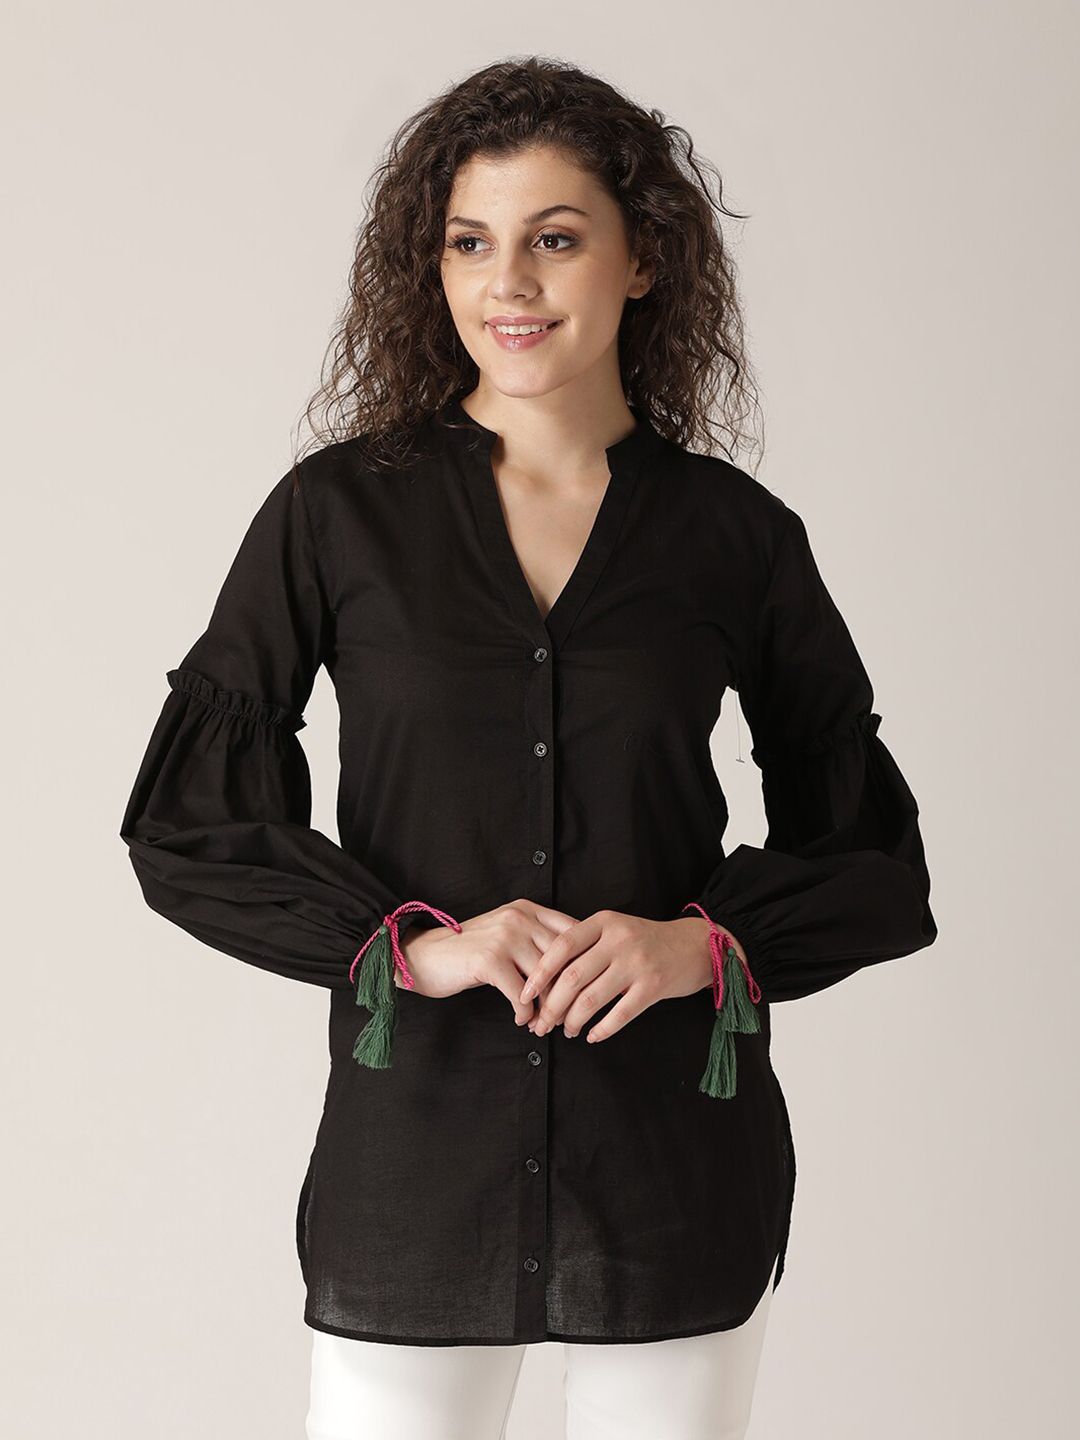 DressBerry Black & licorice Mandarin Collar Shirt Style Top Price in India